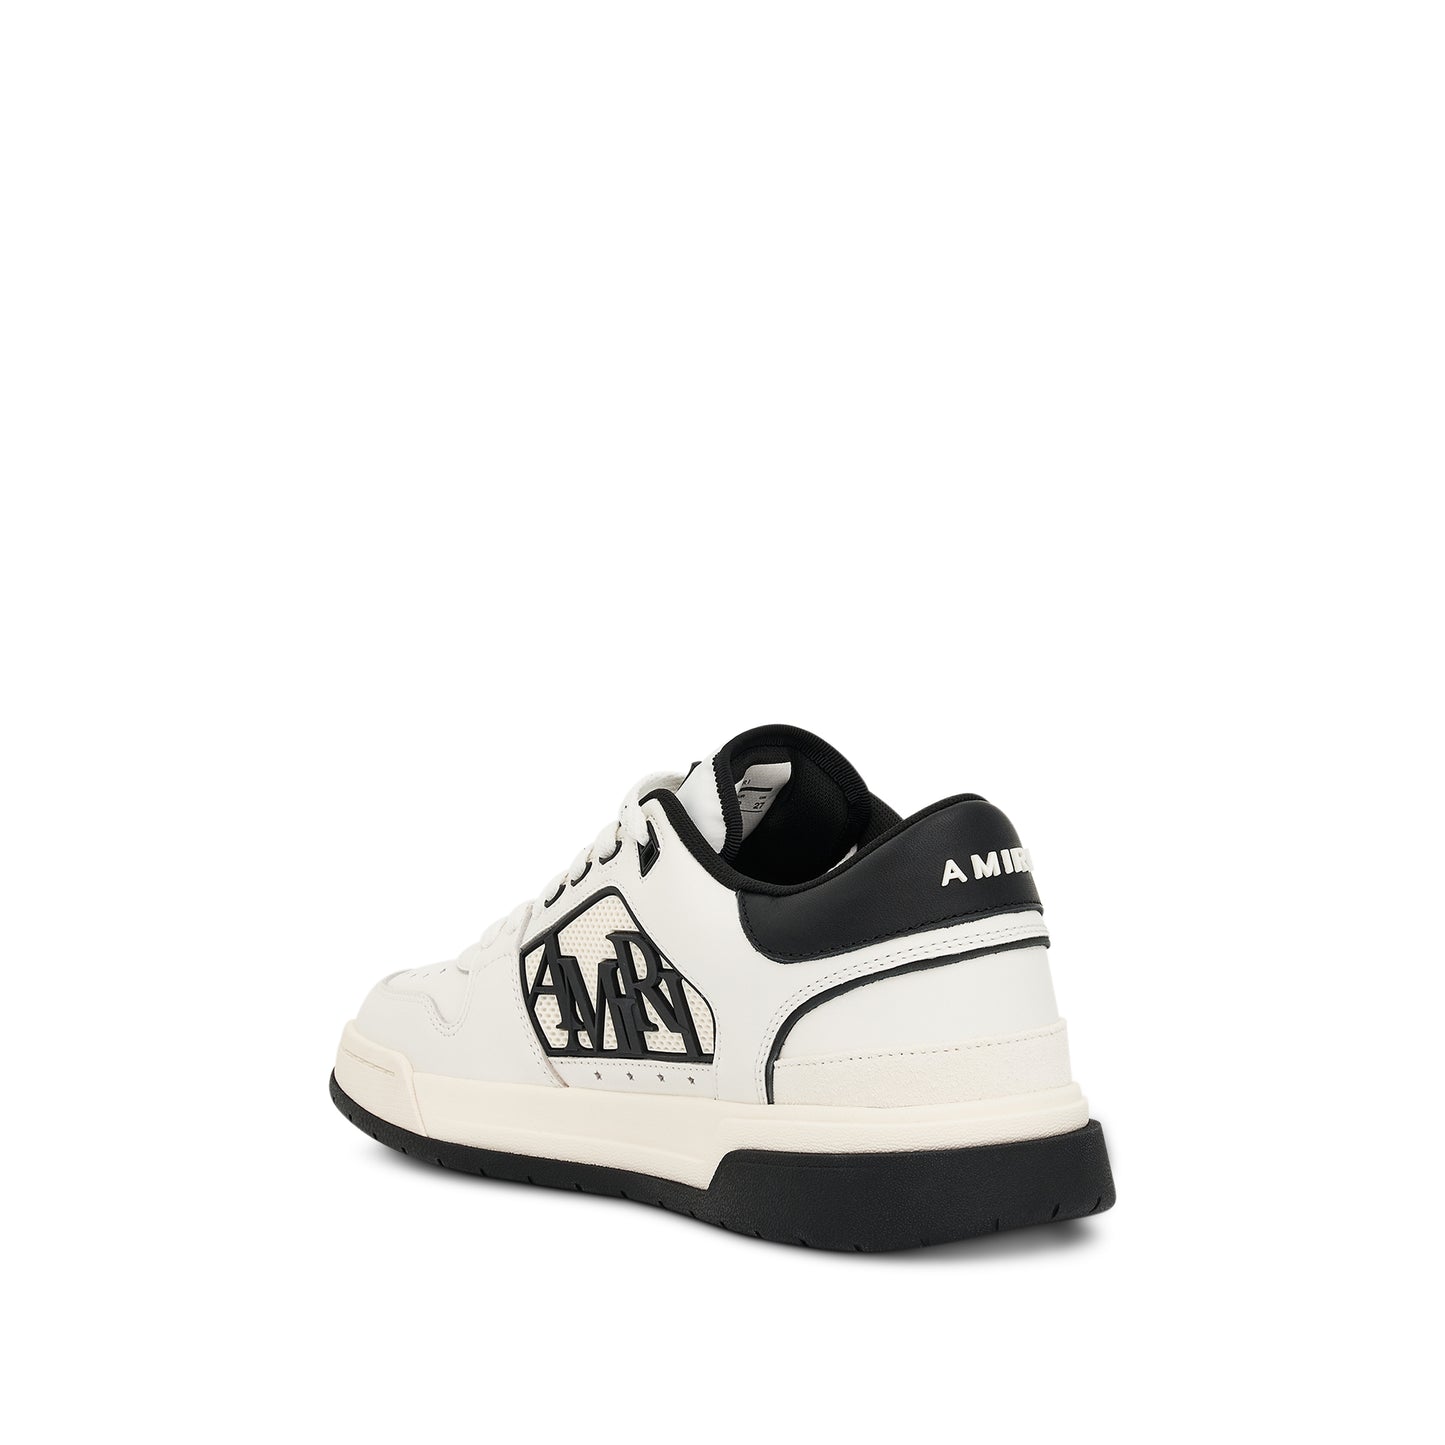 Classic Low Top Sneaker in White/Black